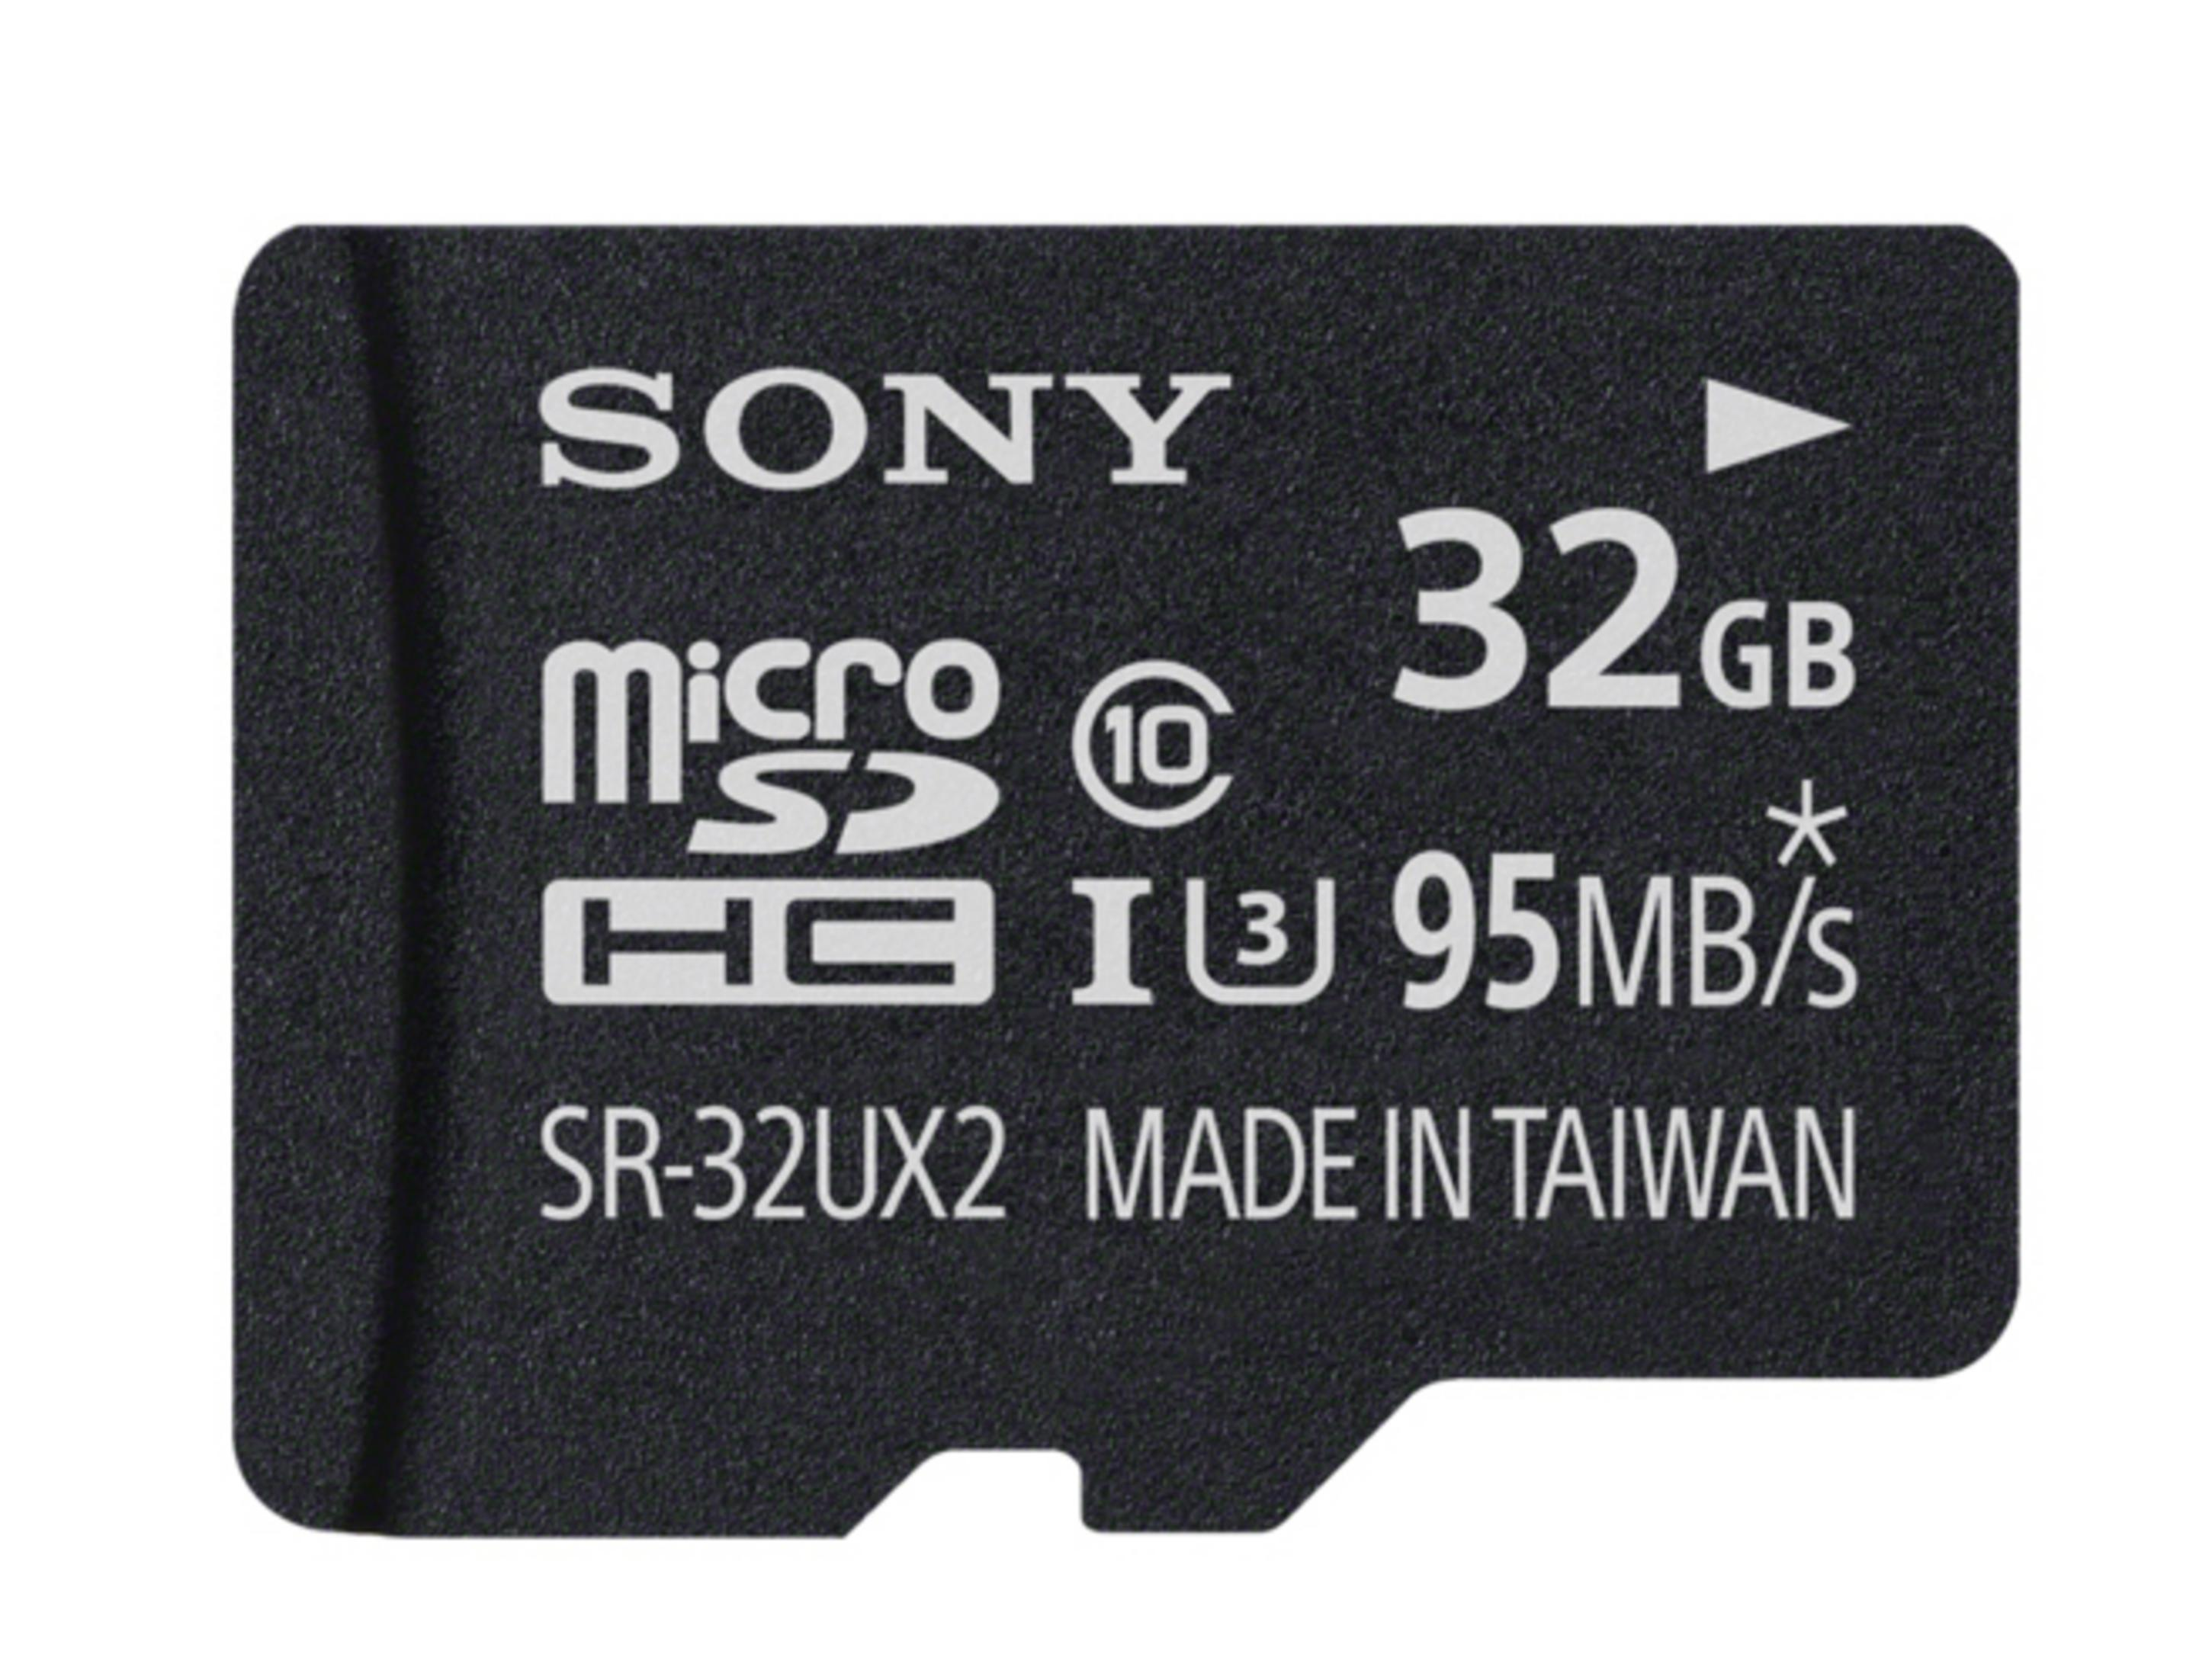 Speicherkarte, GB, MB/s SR32UXA, 32 SONY 95 Micro-SDHC